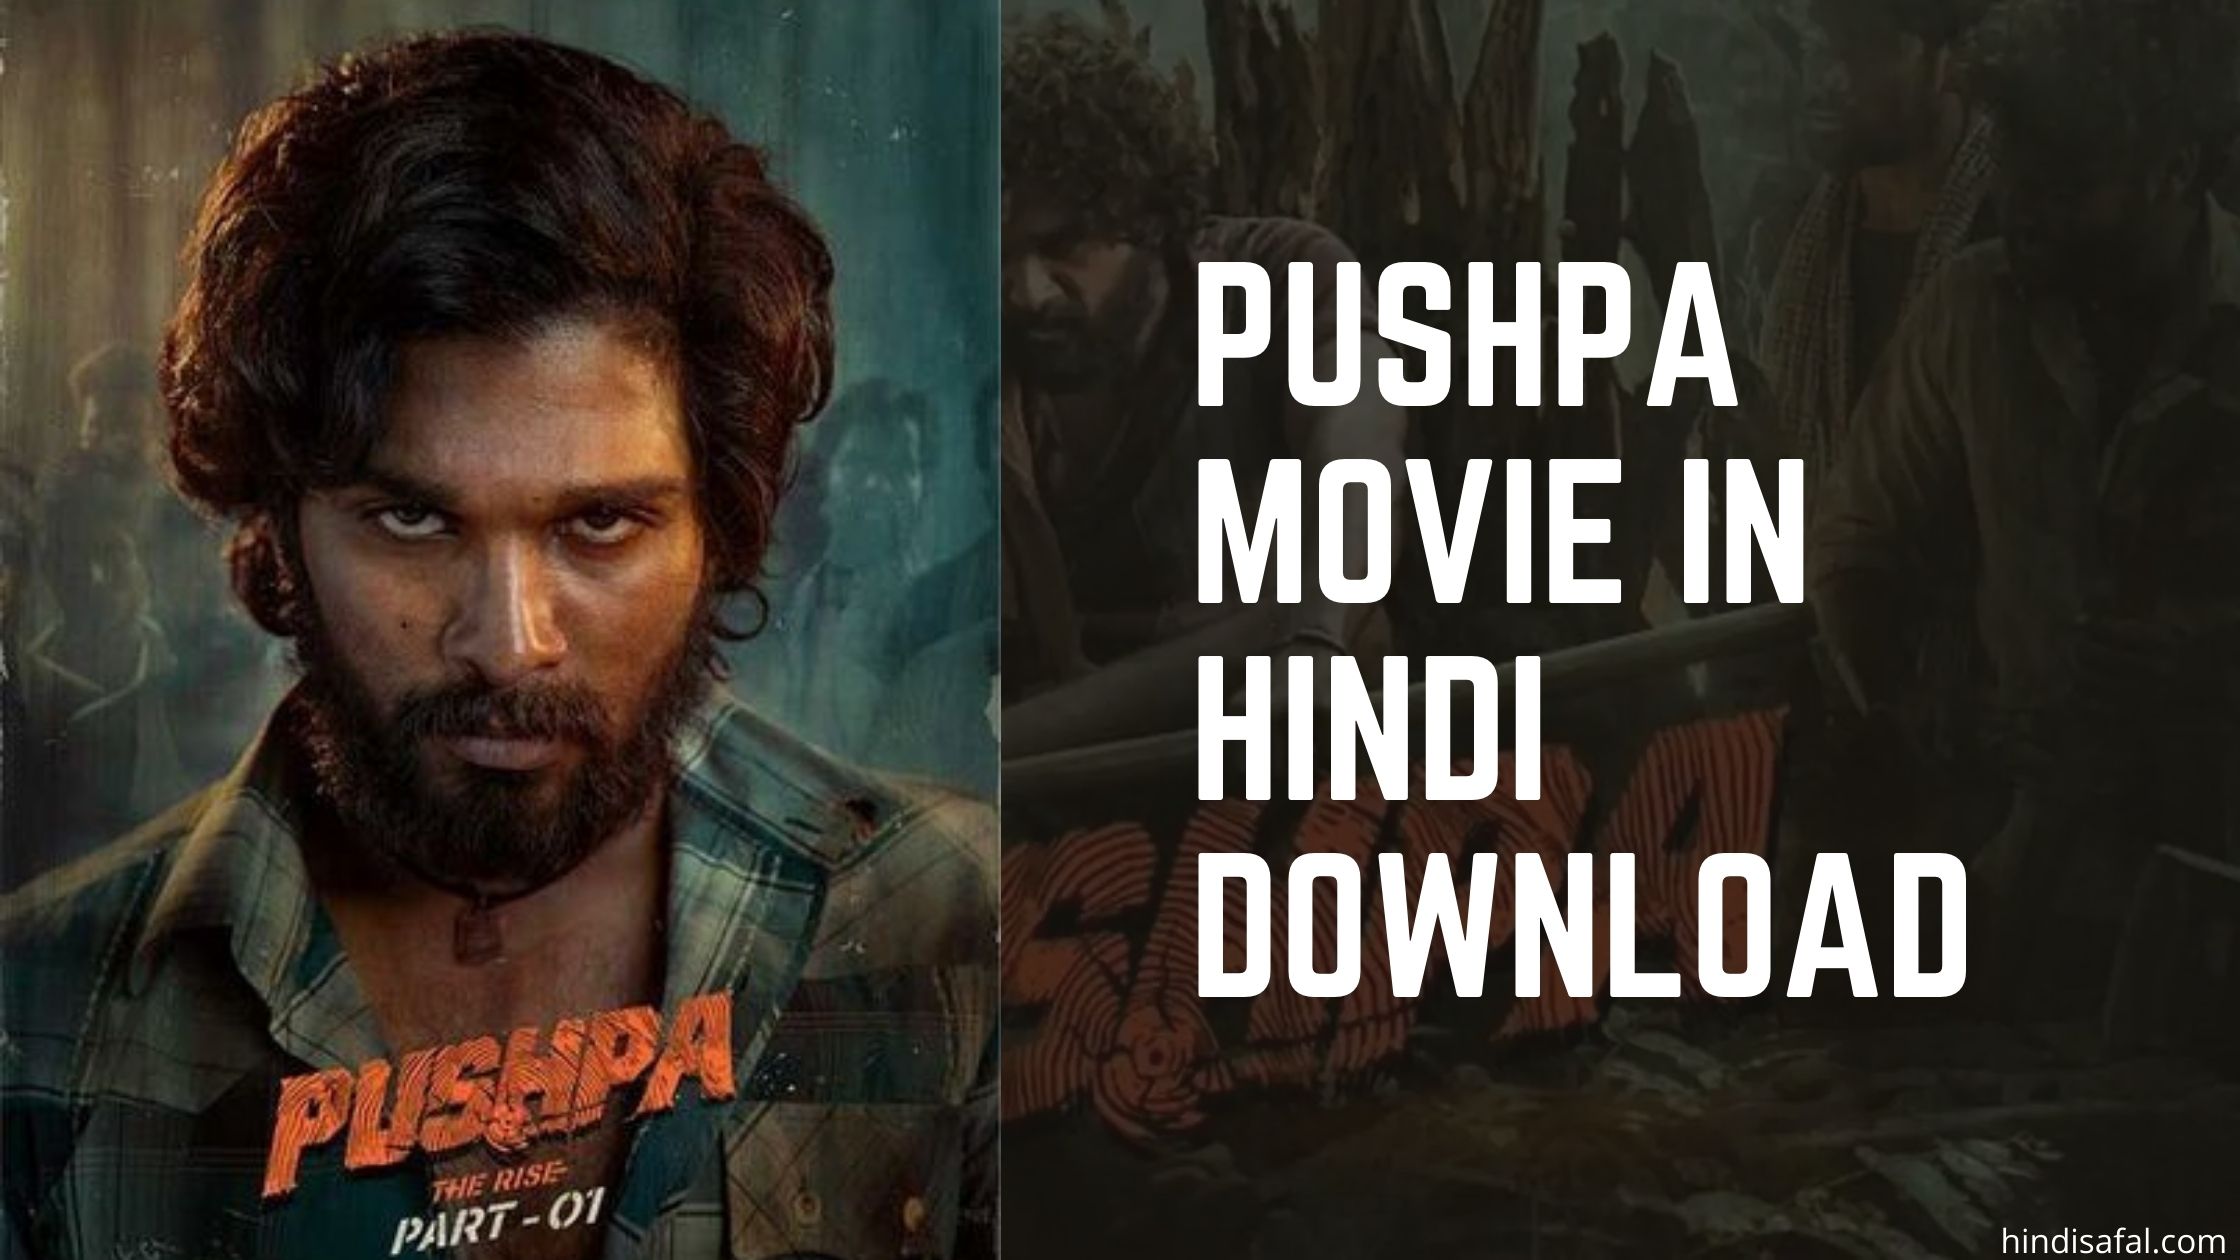 Pushpa Movie in Hindi Download